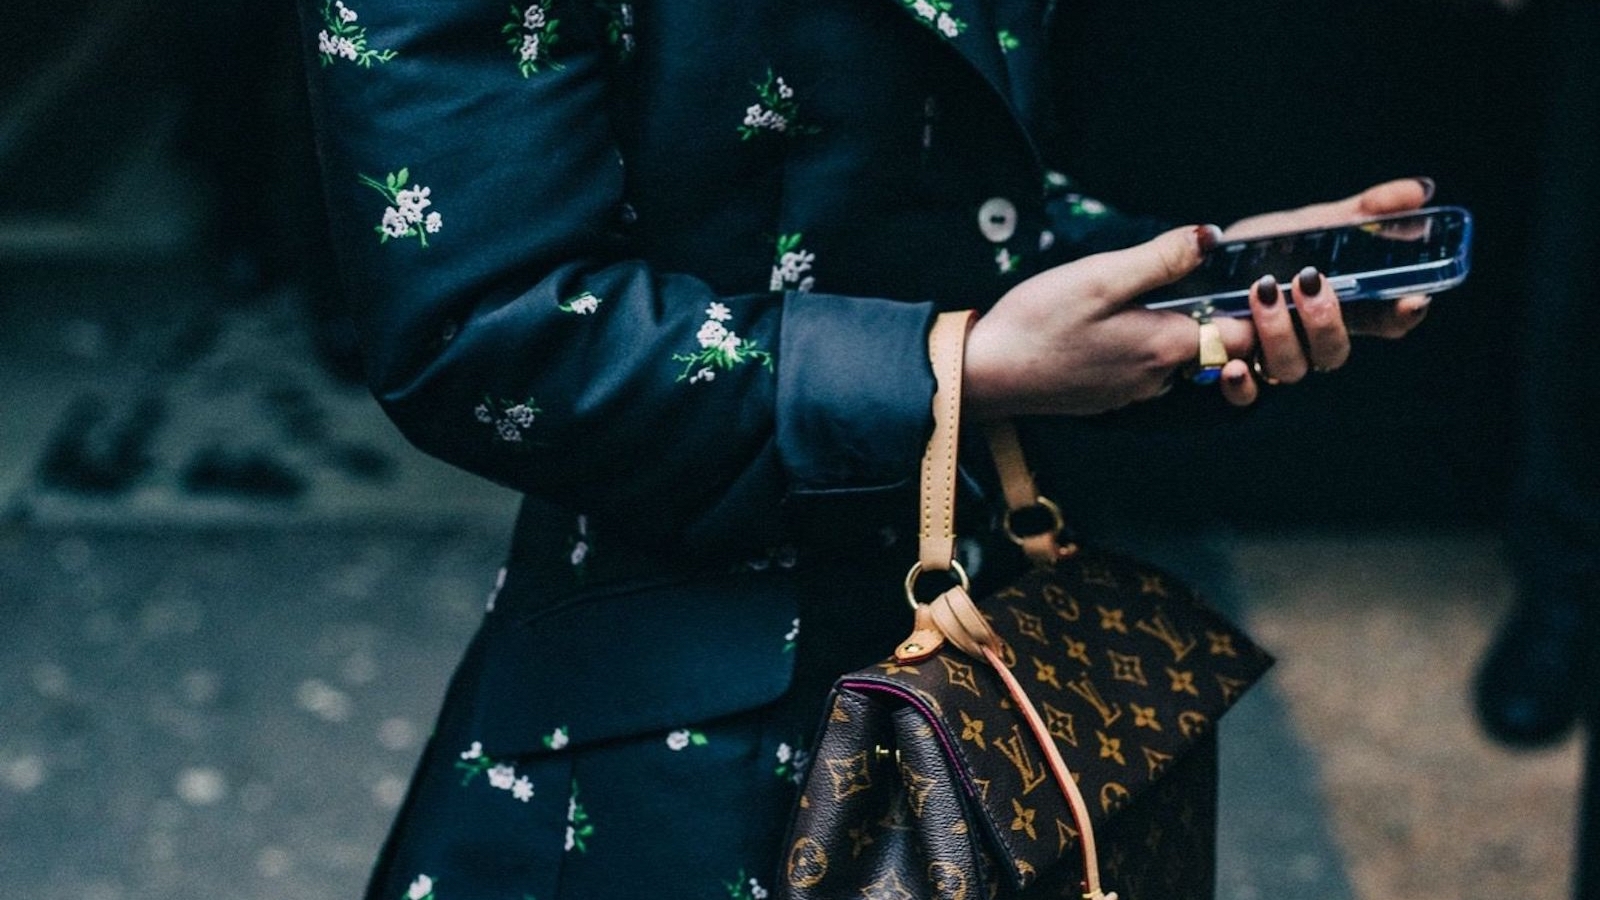 Luxury Designer Handbags  Purses  Womens Bags Collection  LOUIS VUITTON  